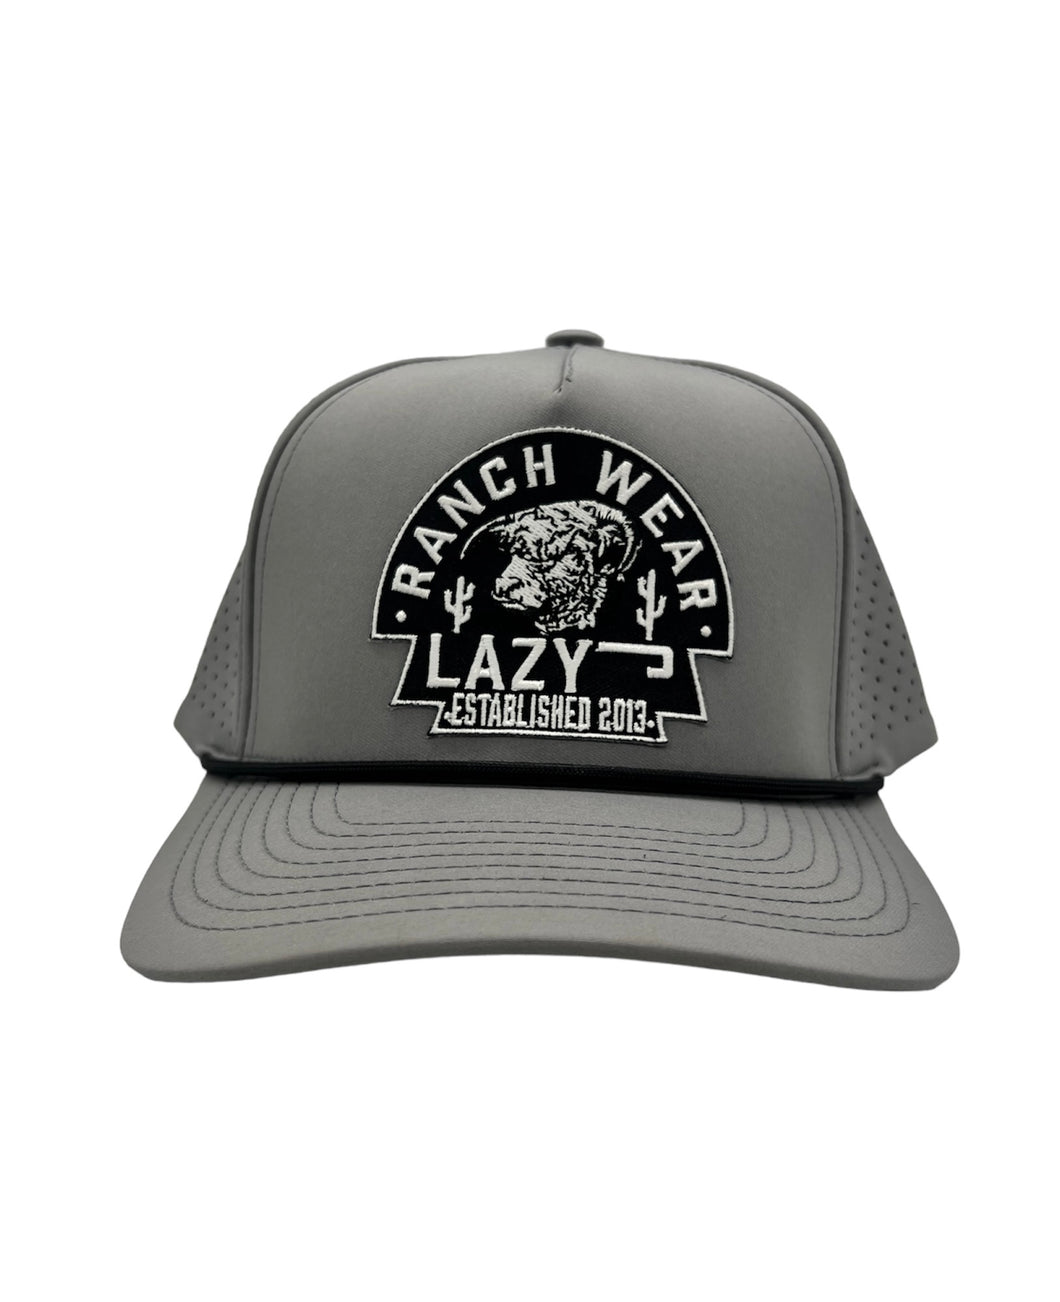 Lazy J Ranch Wear Graphite Arrowhead Cap